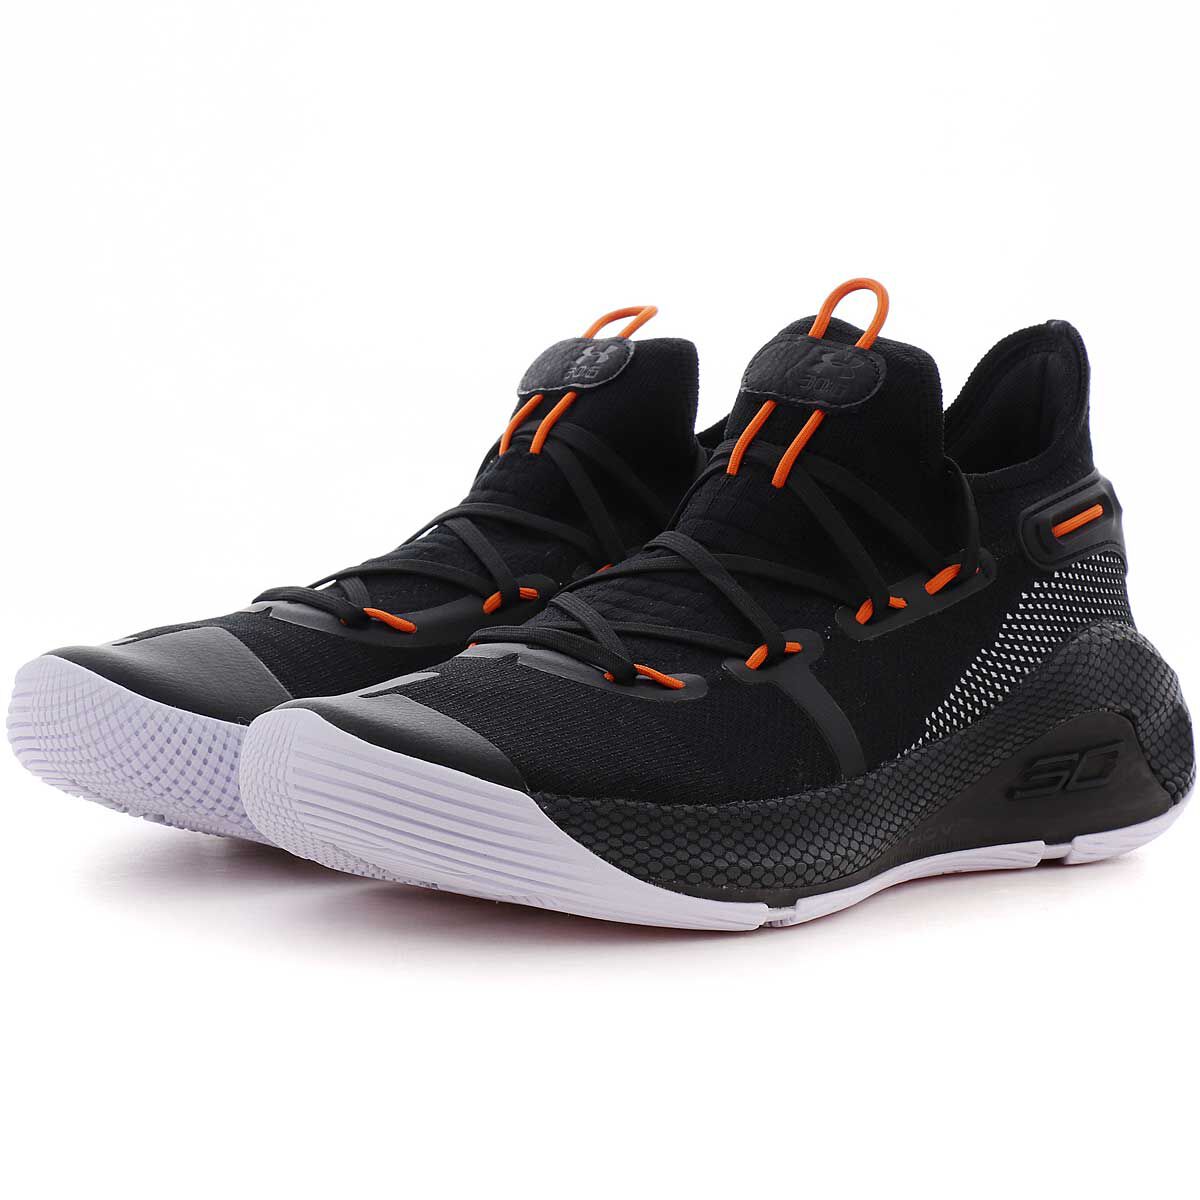 Under Armour Men's Team Curry 7 Basketball Shoes, Black, 6.5 D(M) US